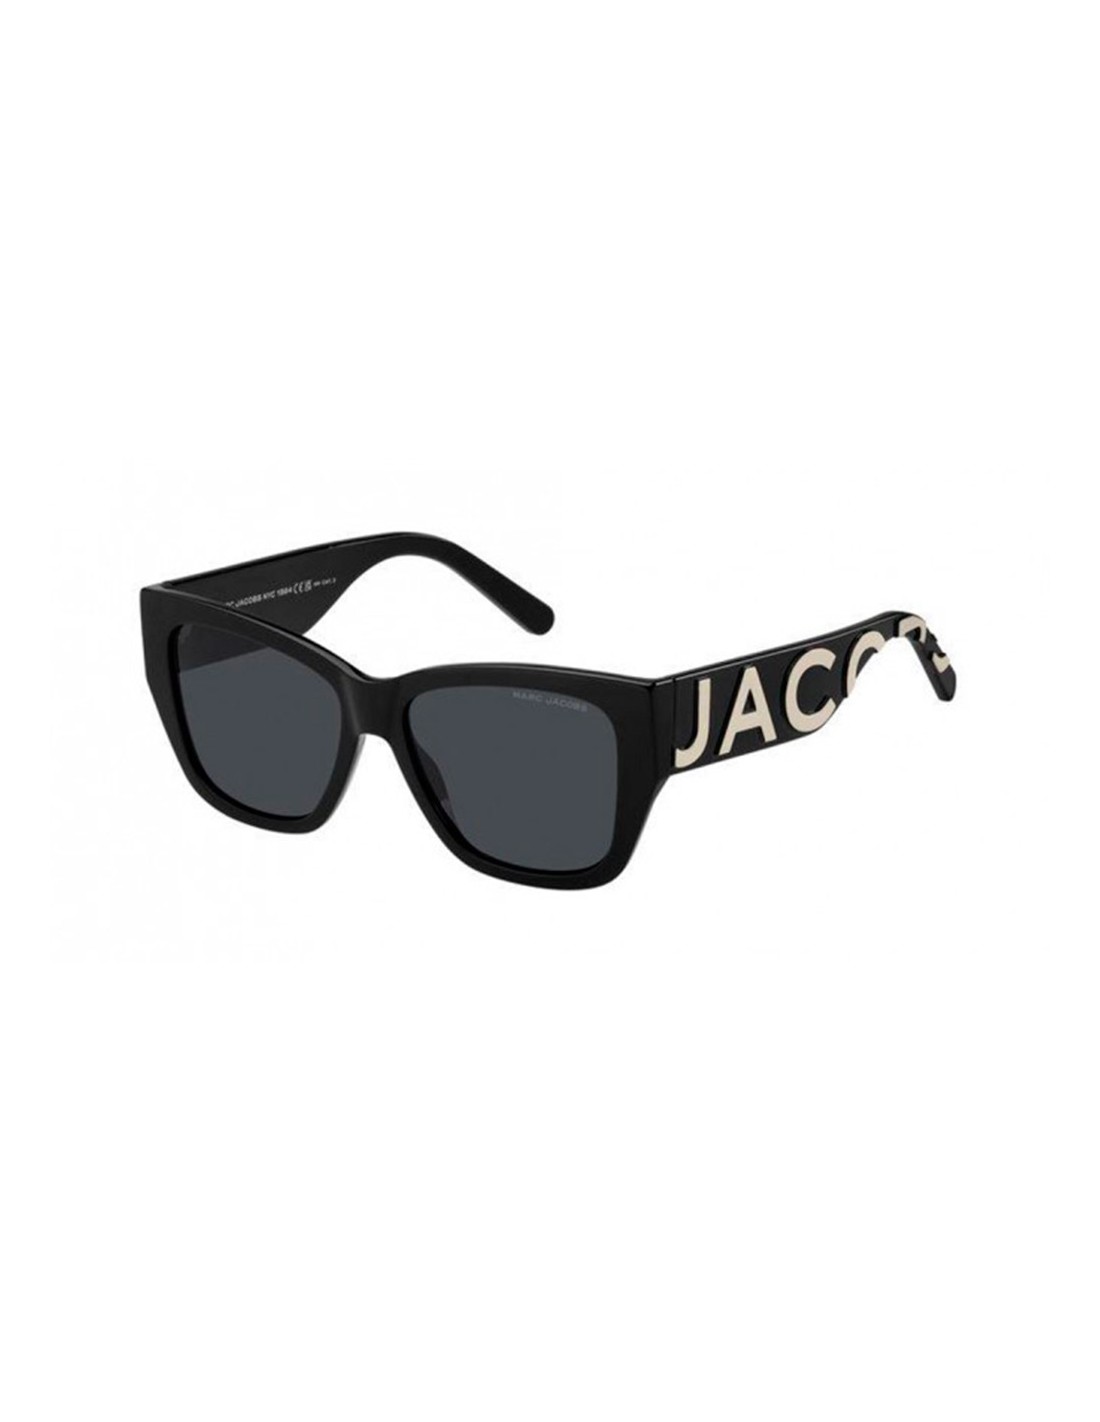 MARC JACOBS Sunglasses - ivory/white - Zalando.ie